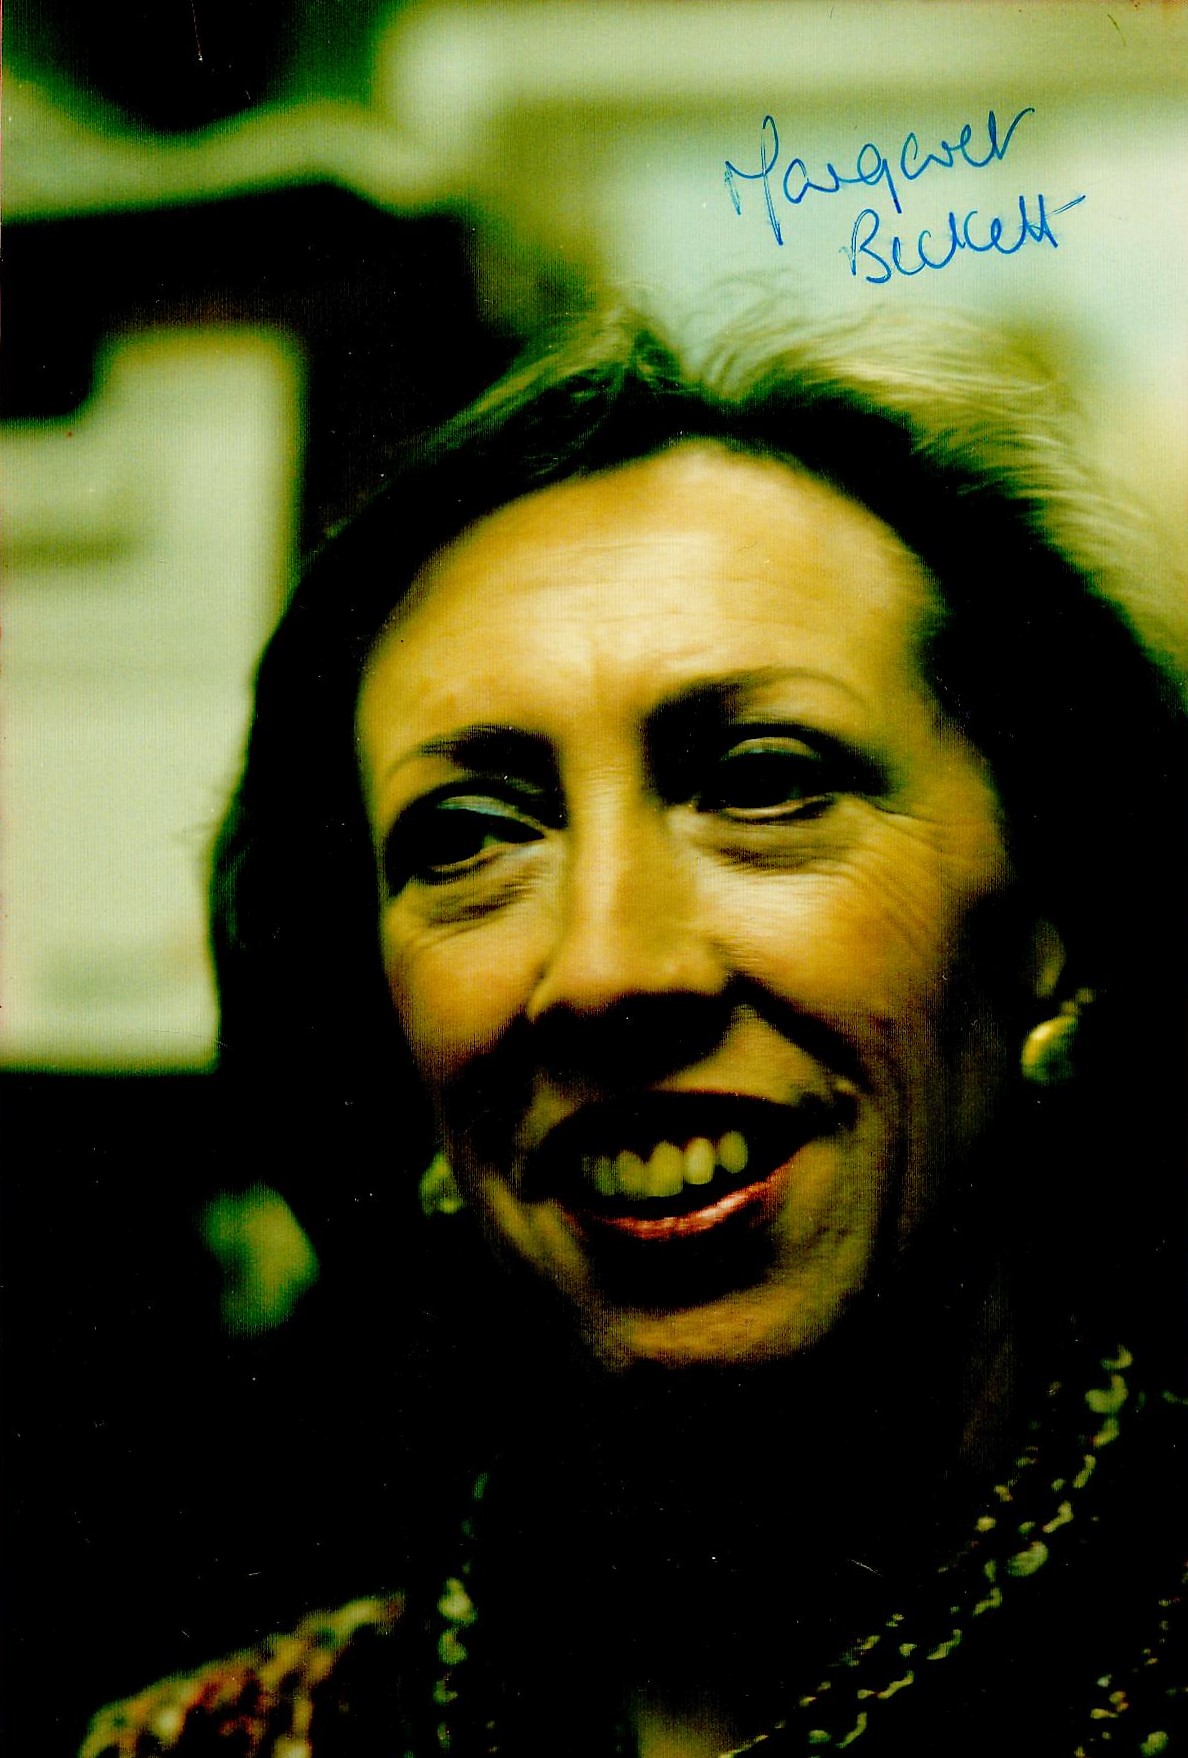 Margaret Beckett signed 6x4 colour photo. Dame Margaret Mary Beckett DBE PC MP (née Jackson; born 15